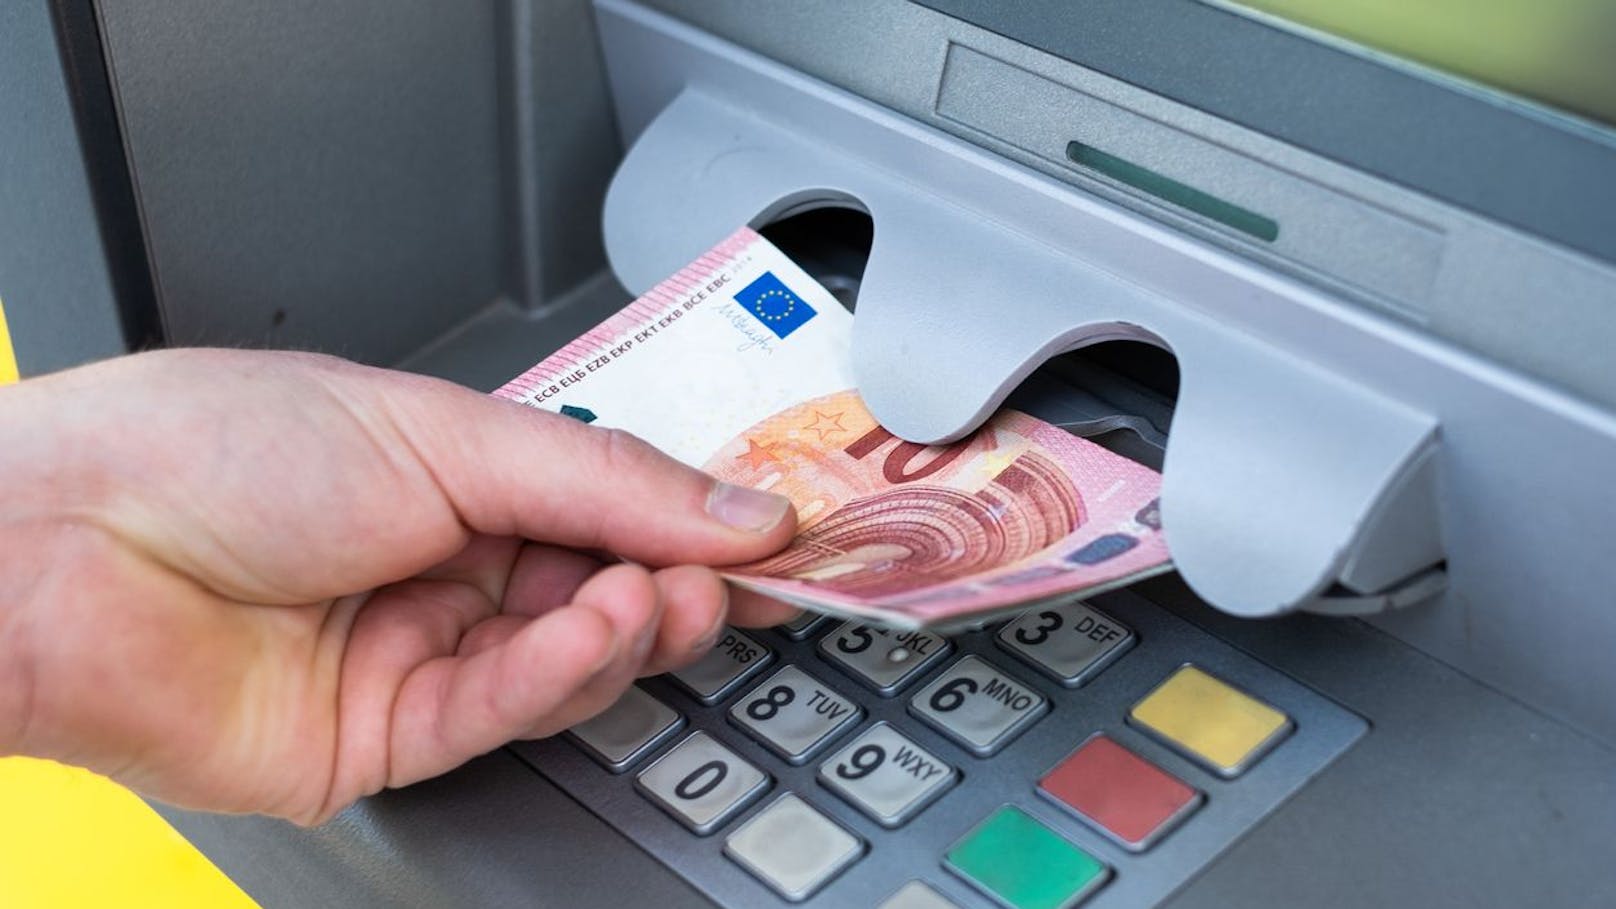 39-Jähriger manipuliert Bankomaten – 7.500 € erbeutet